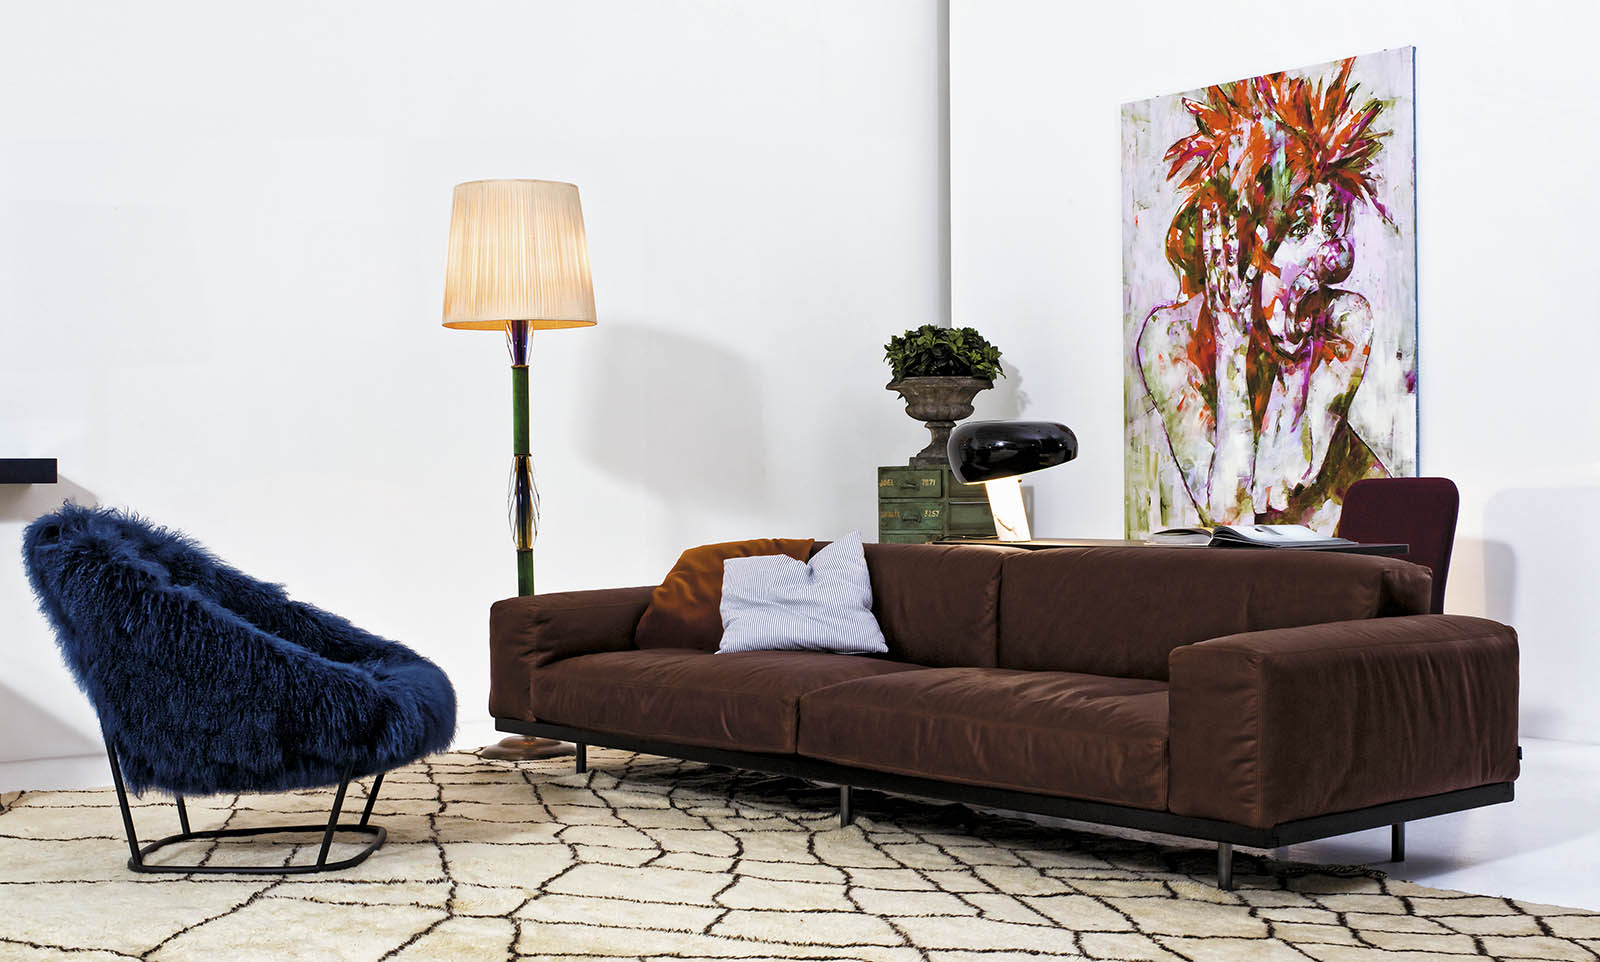 arflex-Katrin-fauteuil-design-Carlo-Colombo-fourrure-dossier-haut-salon-collectivité-projet-luxe-madeinitaly-moderne-contemporain